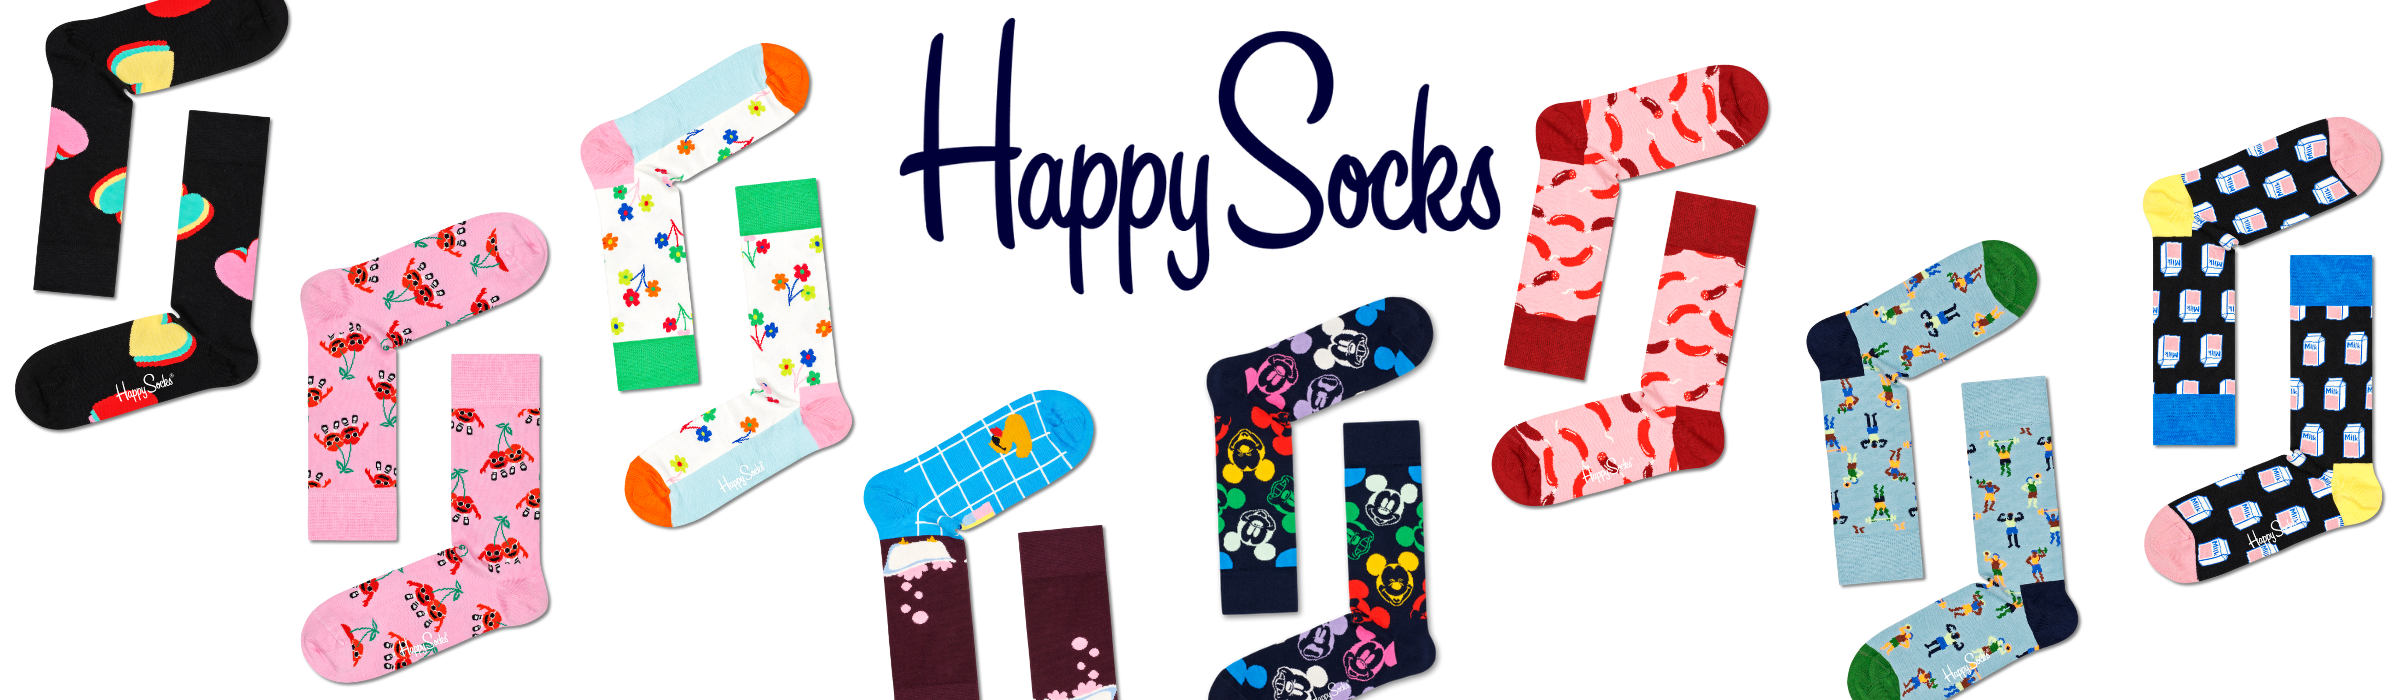 Happy Socks Banner